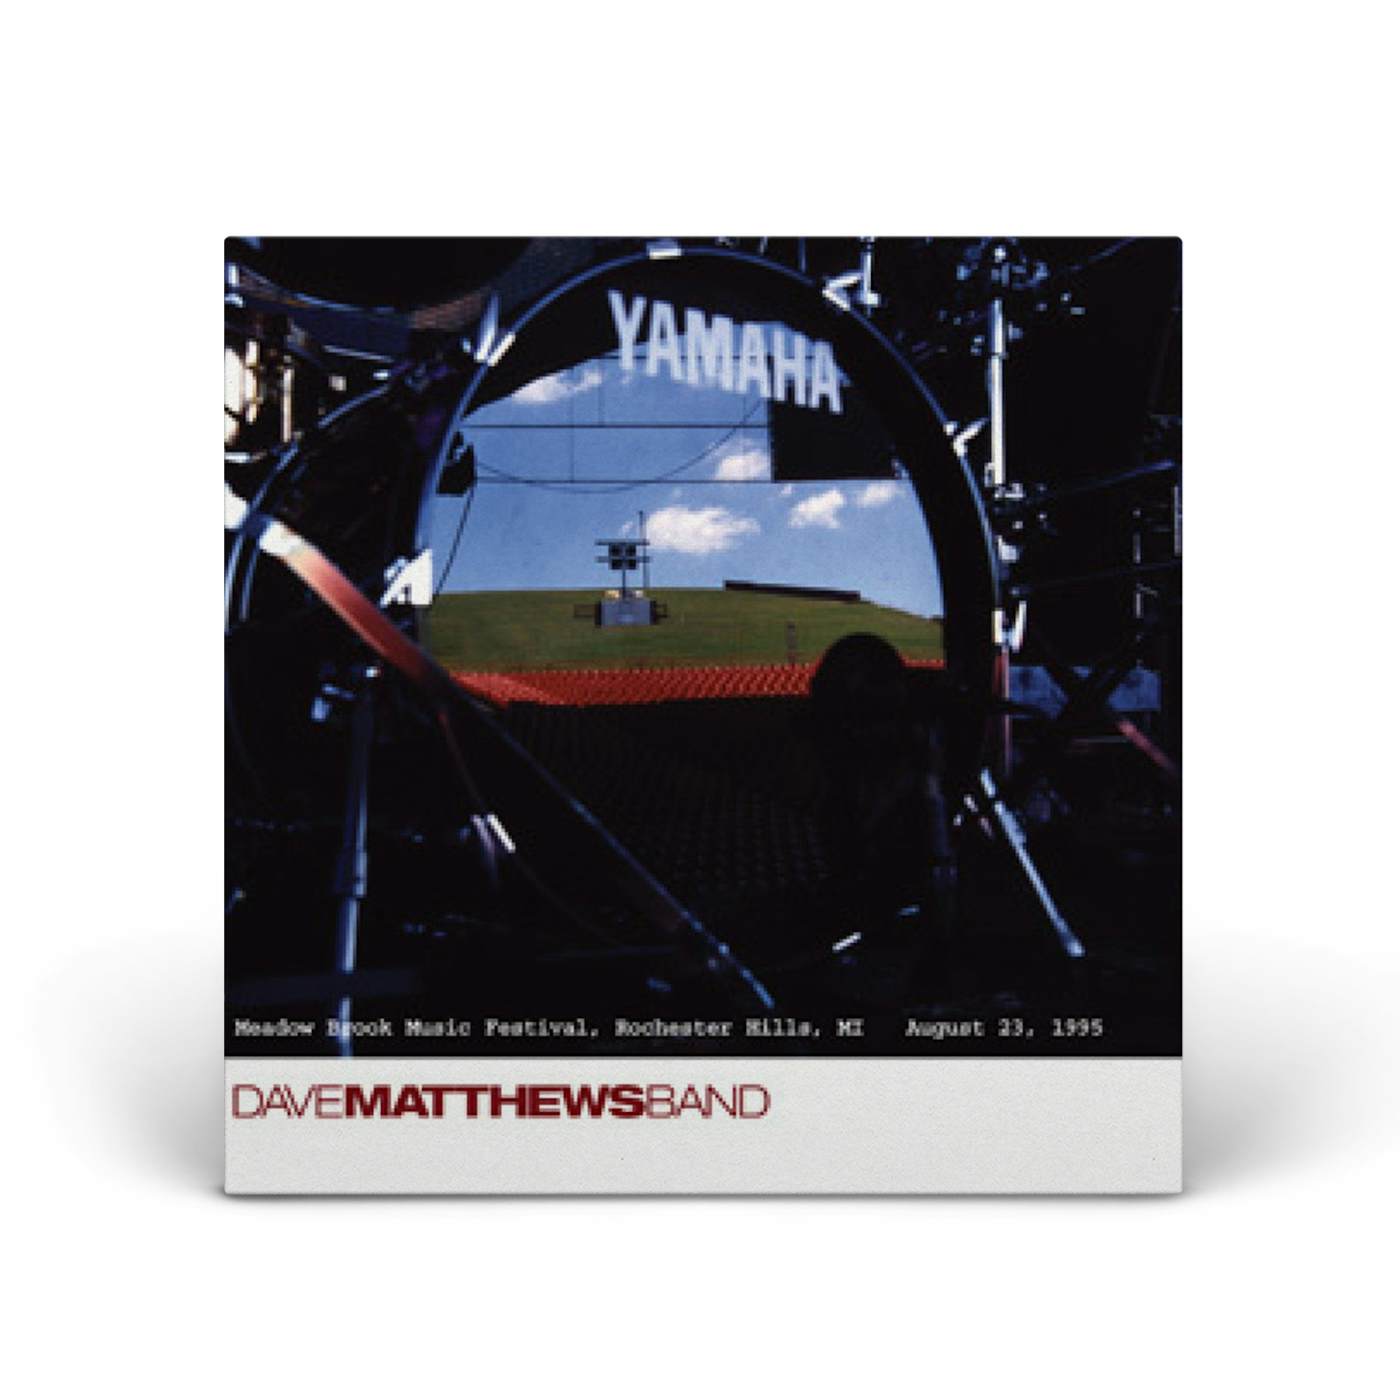 Dave Matthews Band Live Trax Vol. 5: 8/23/95 Meadow Brook Music Festival